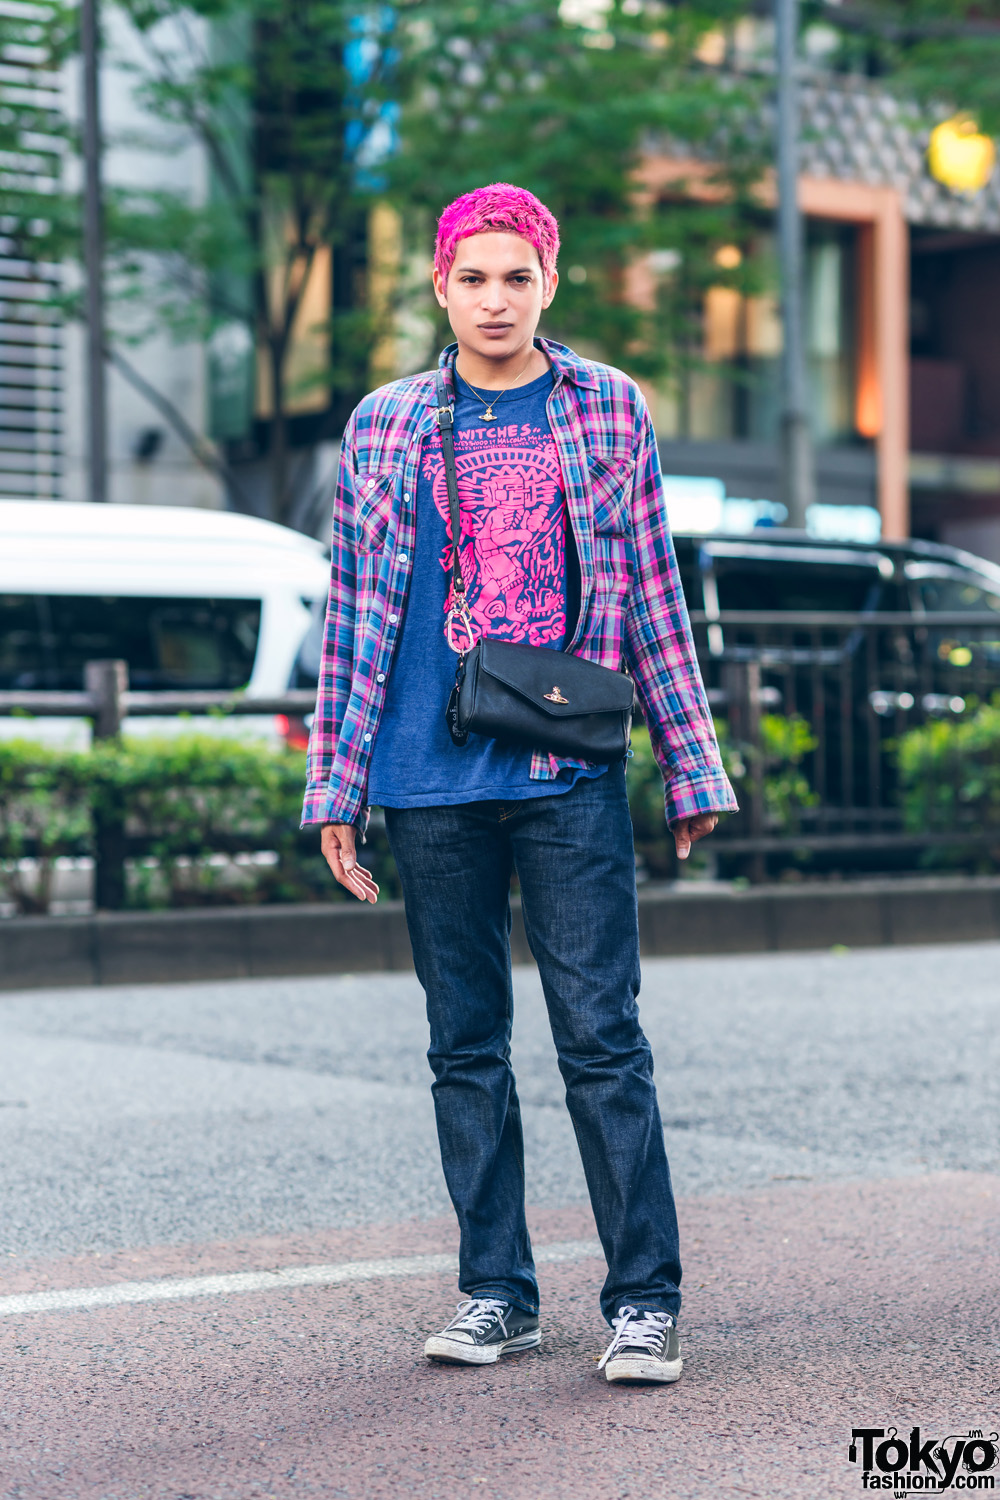 BubbleGum Designer in Harajuku w/ Pink Hair, Beams Flannel Shirt, Supreme Pants, Futura, Vivienne Westwood & Monochrome Sneakers